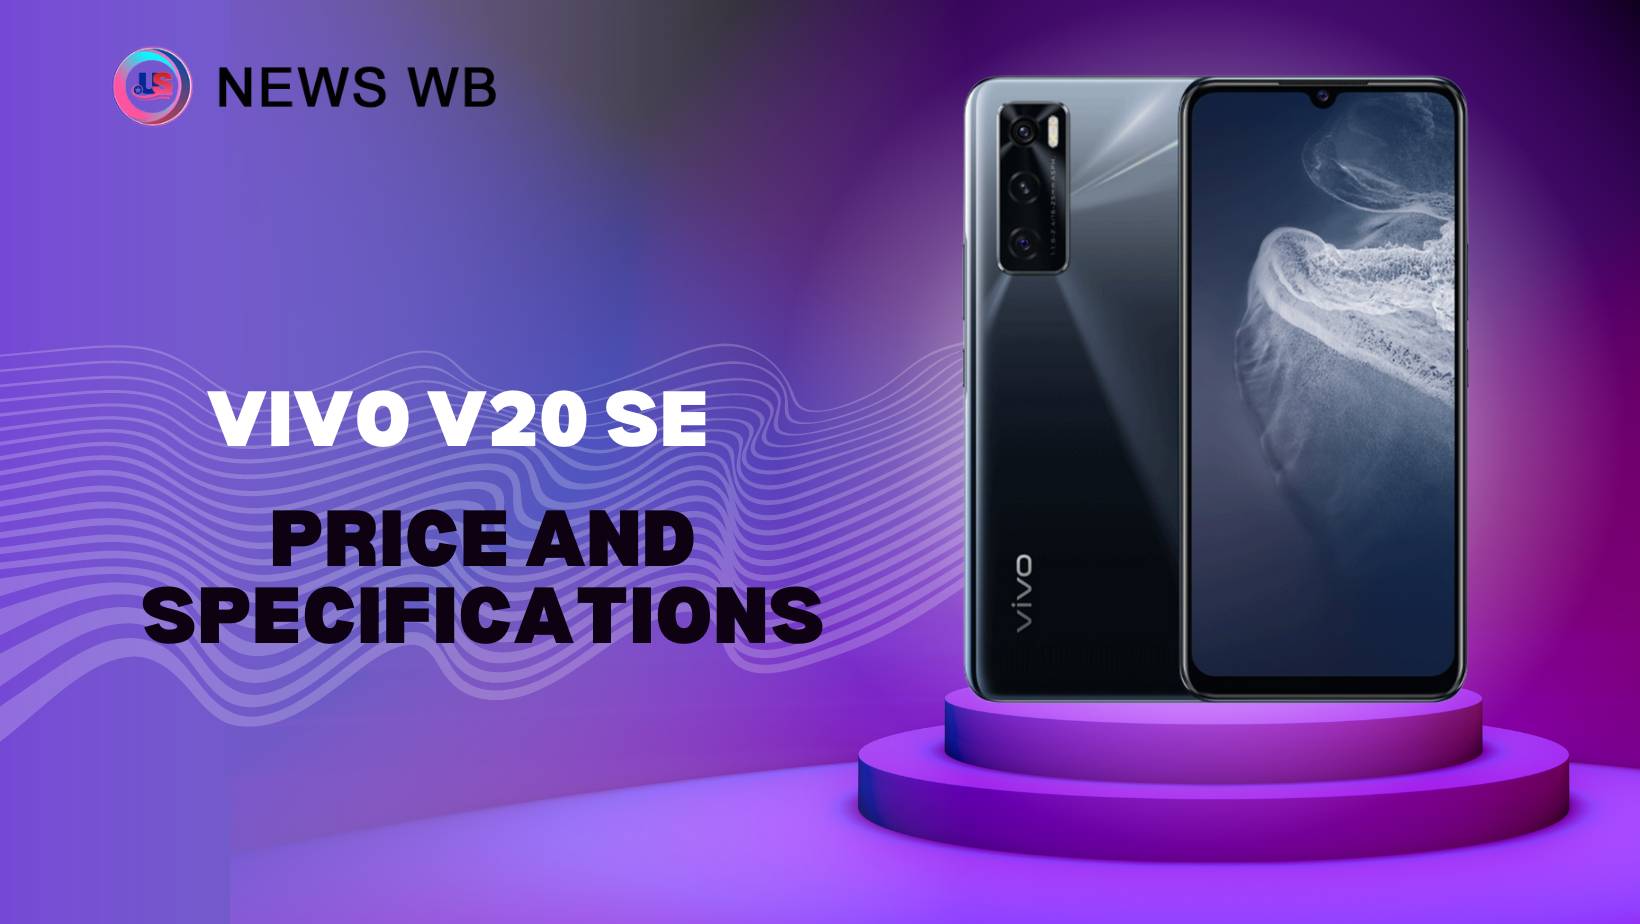 Vivo V20 SE Price and Specifications